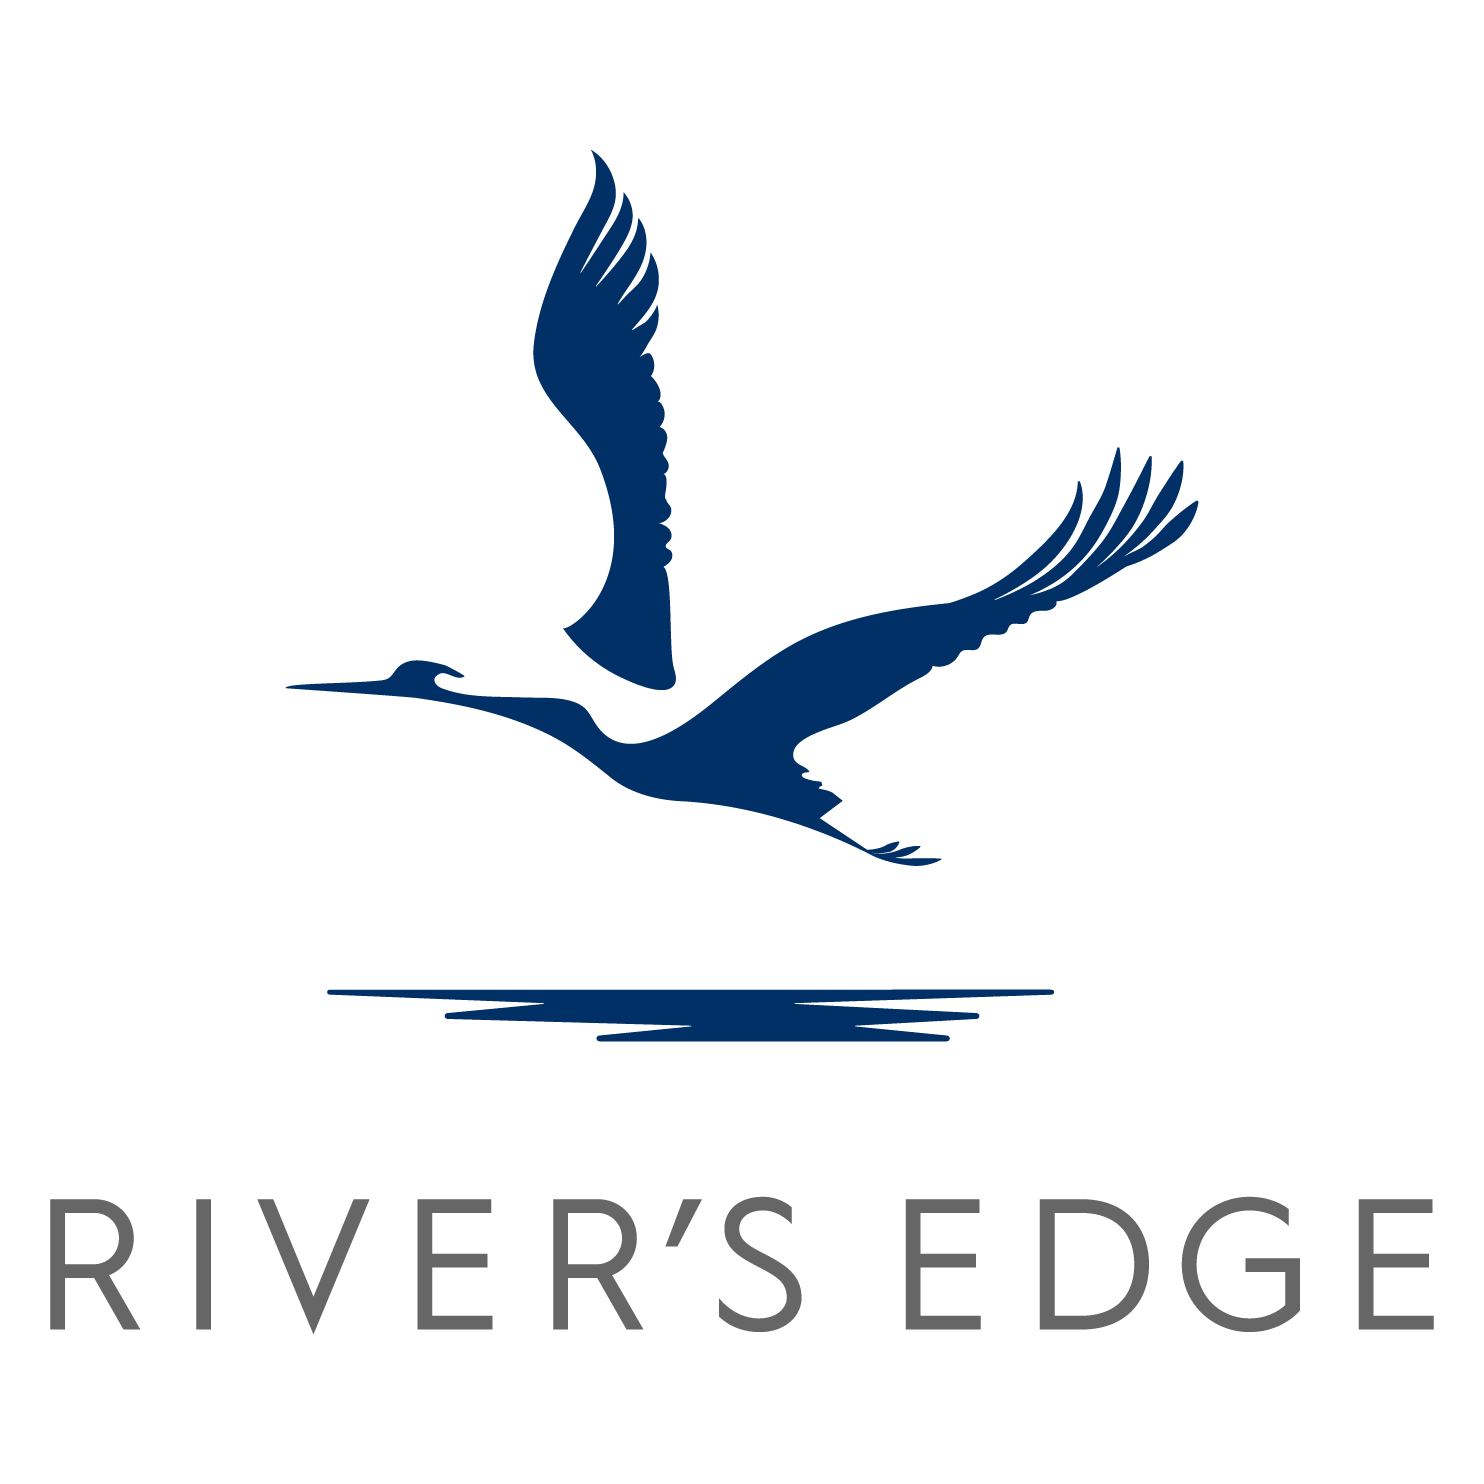 River's Edge - Clinton Township, MI 48038 - (586)286-1021 | ShowMeLocal.com